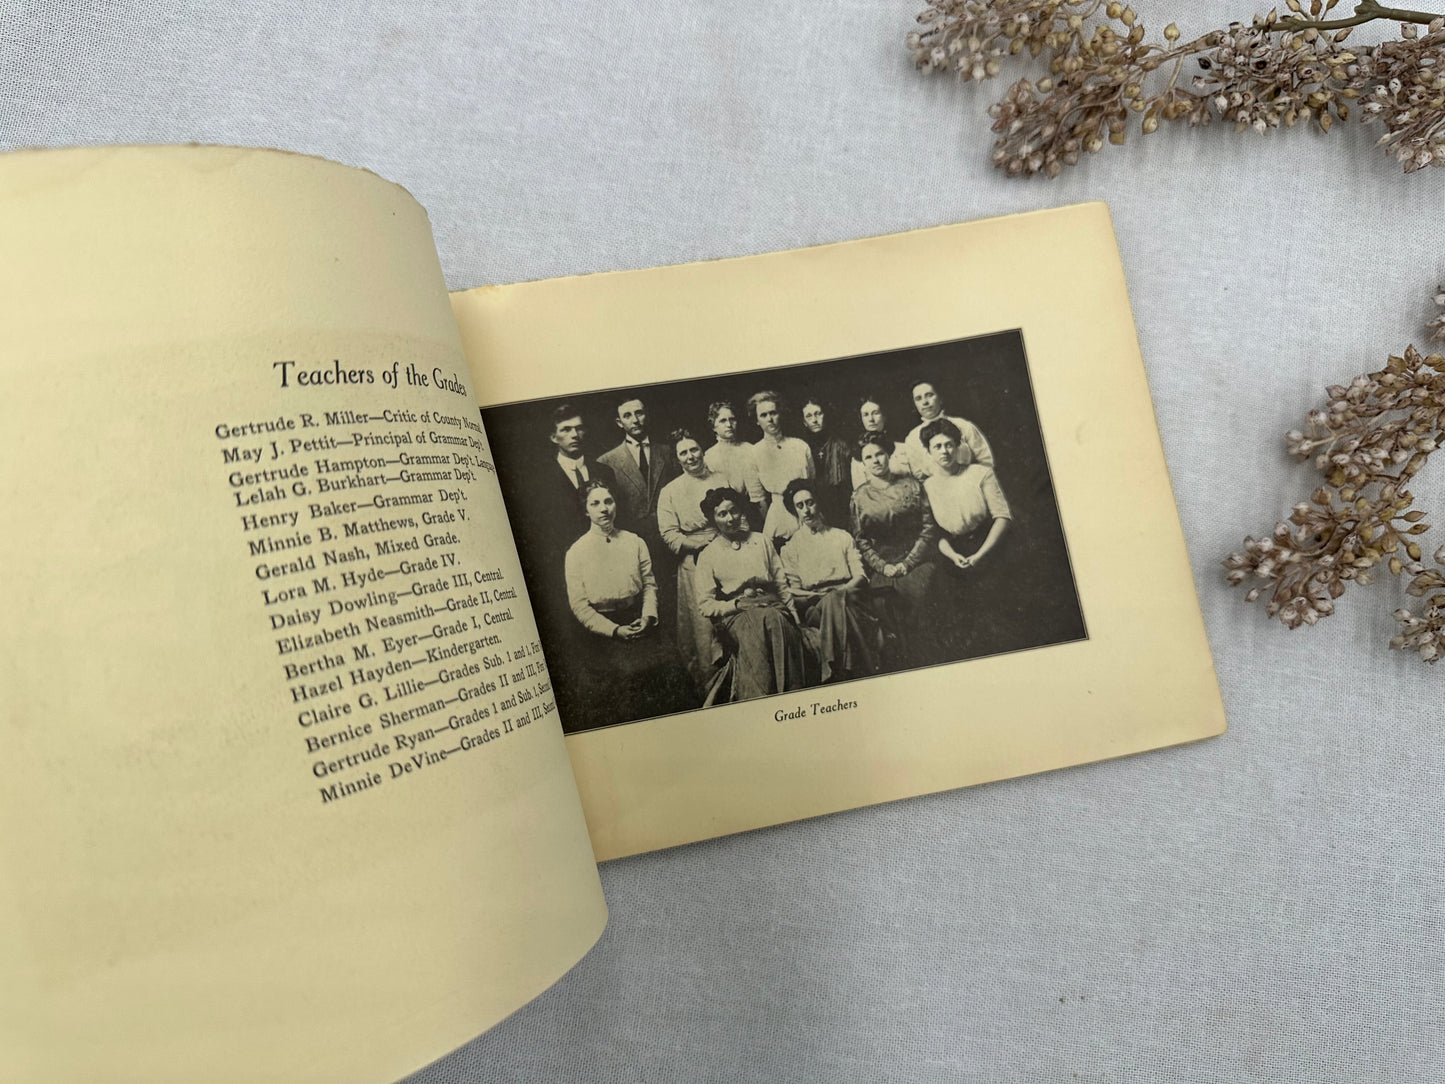 The Druid Year Book- 1911